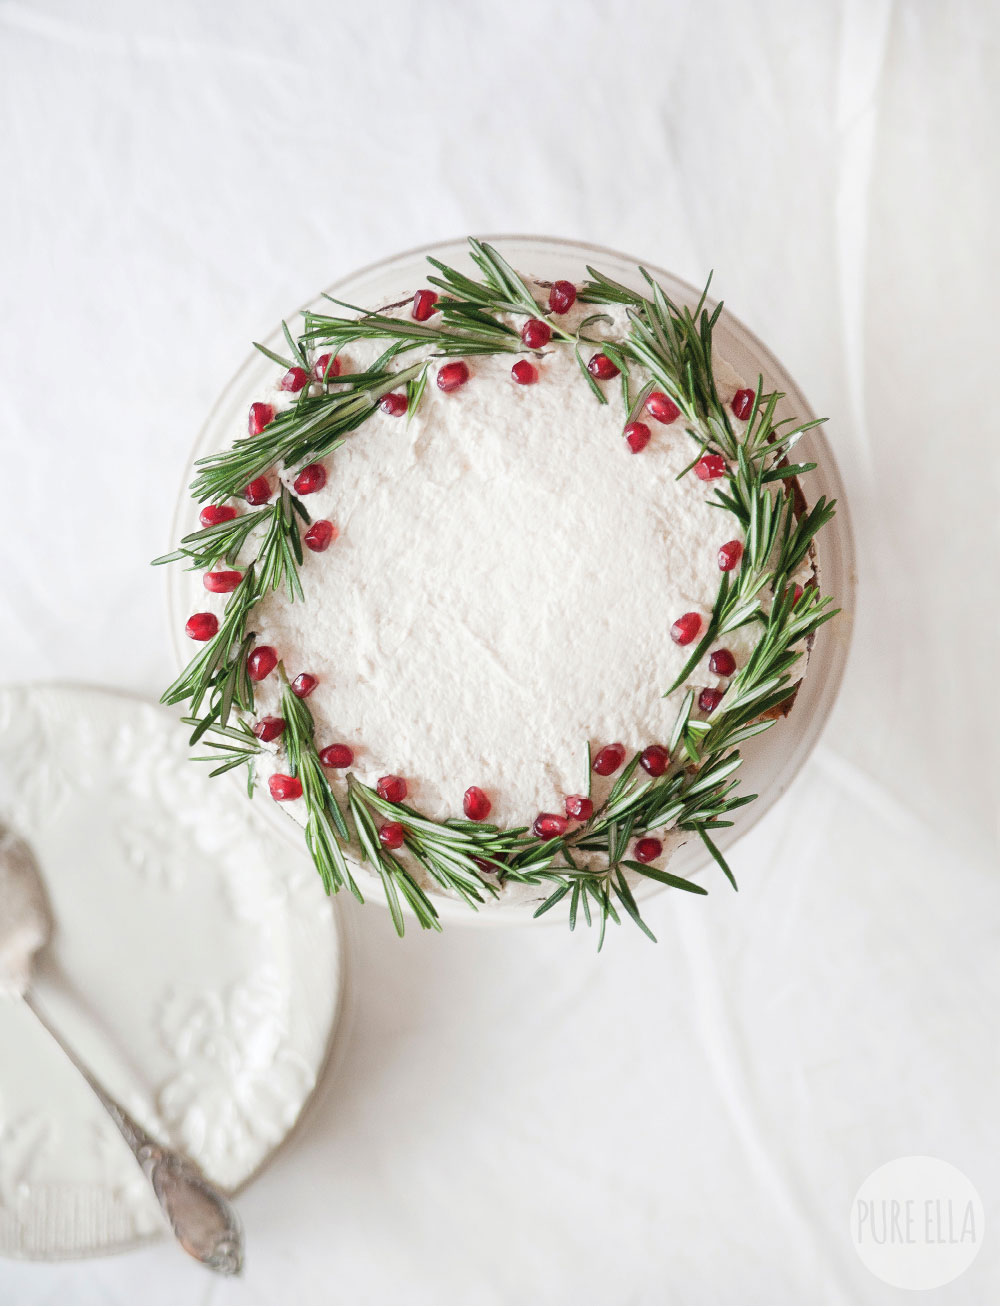 Gluten-free-Vegan-Gingerbread-Christmas-Wreath-Cake-Recipe6